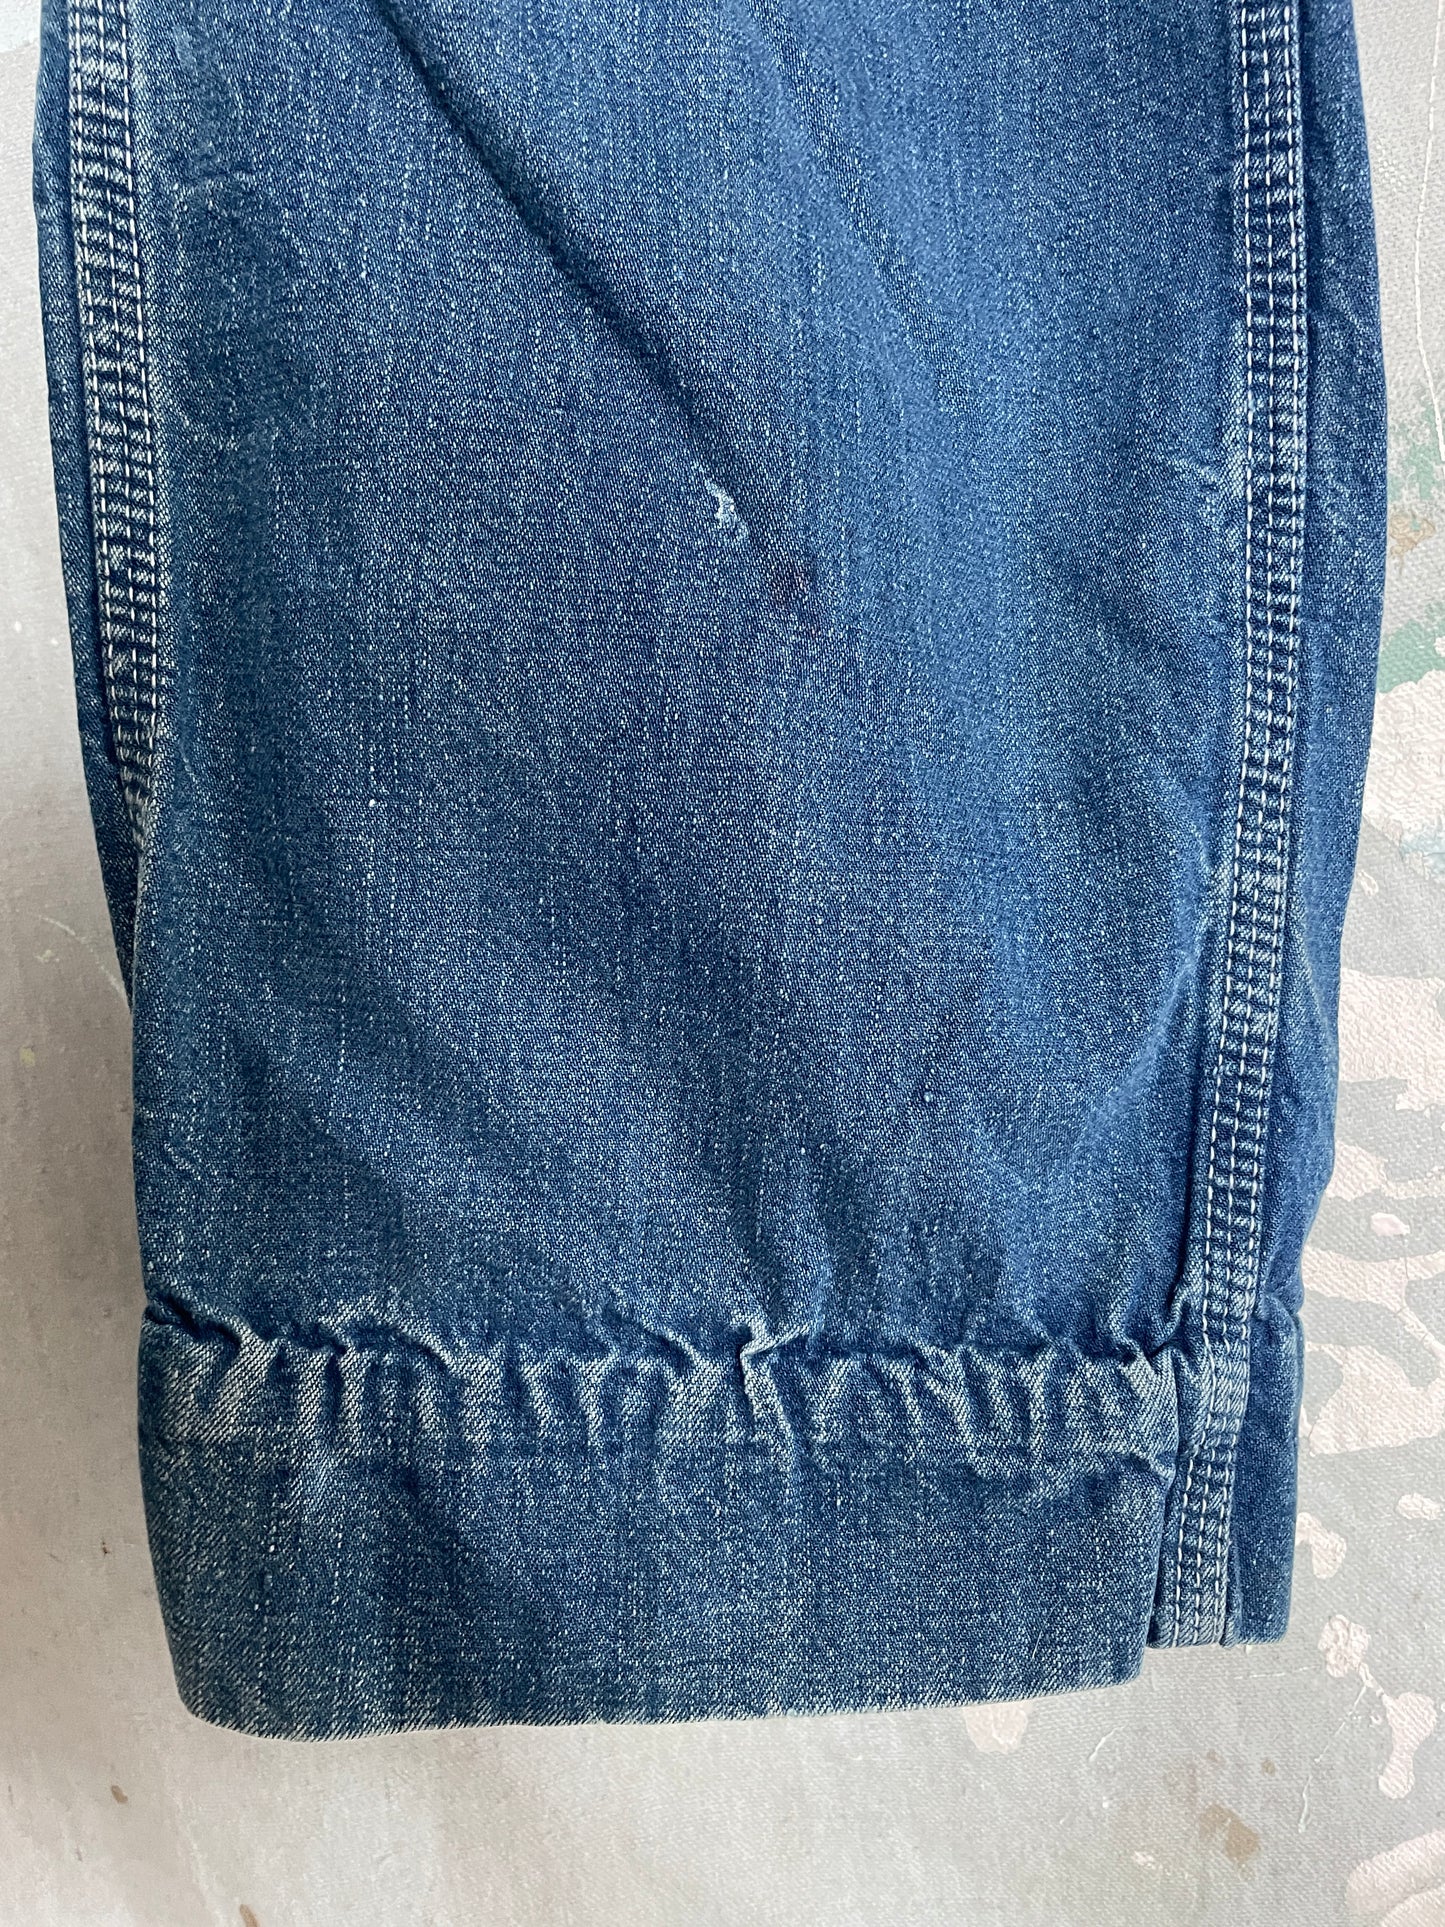 70s/80s Lee Carpenter Jeans